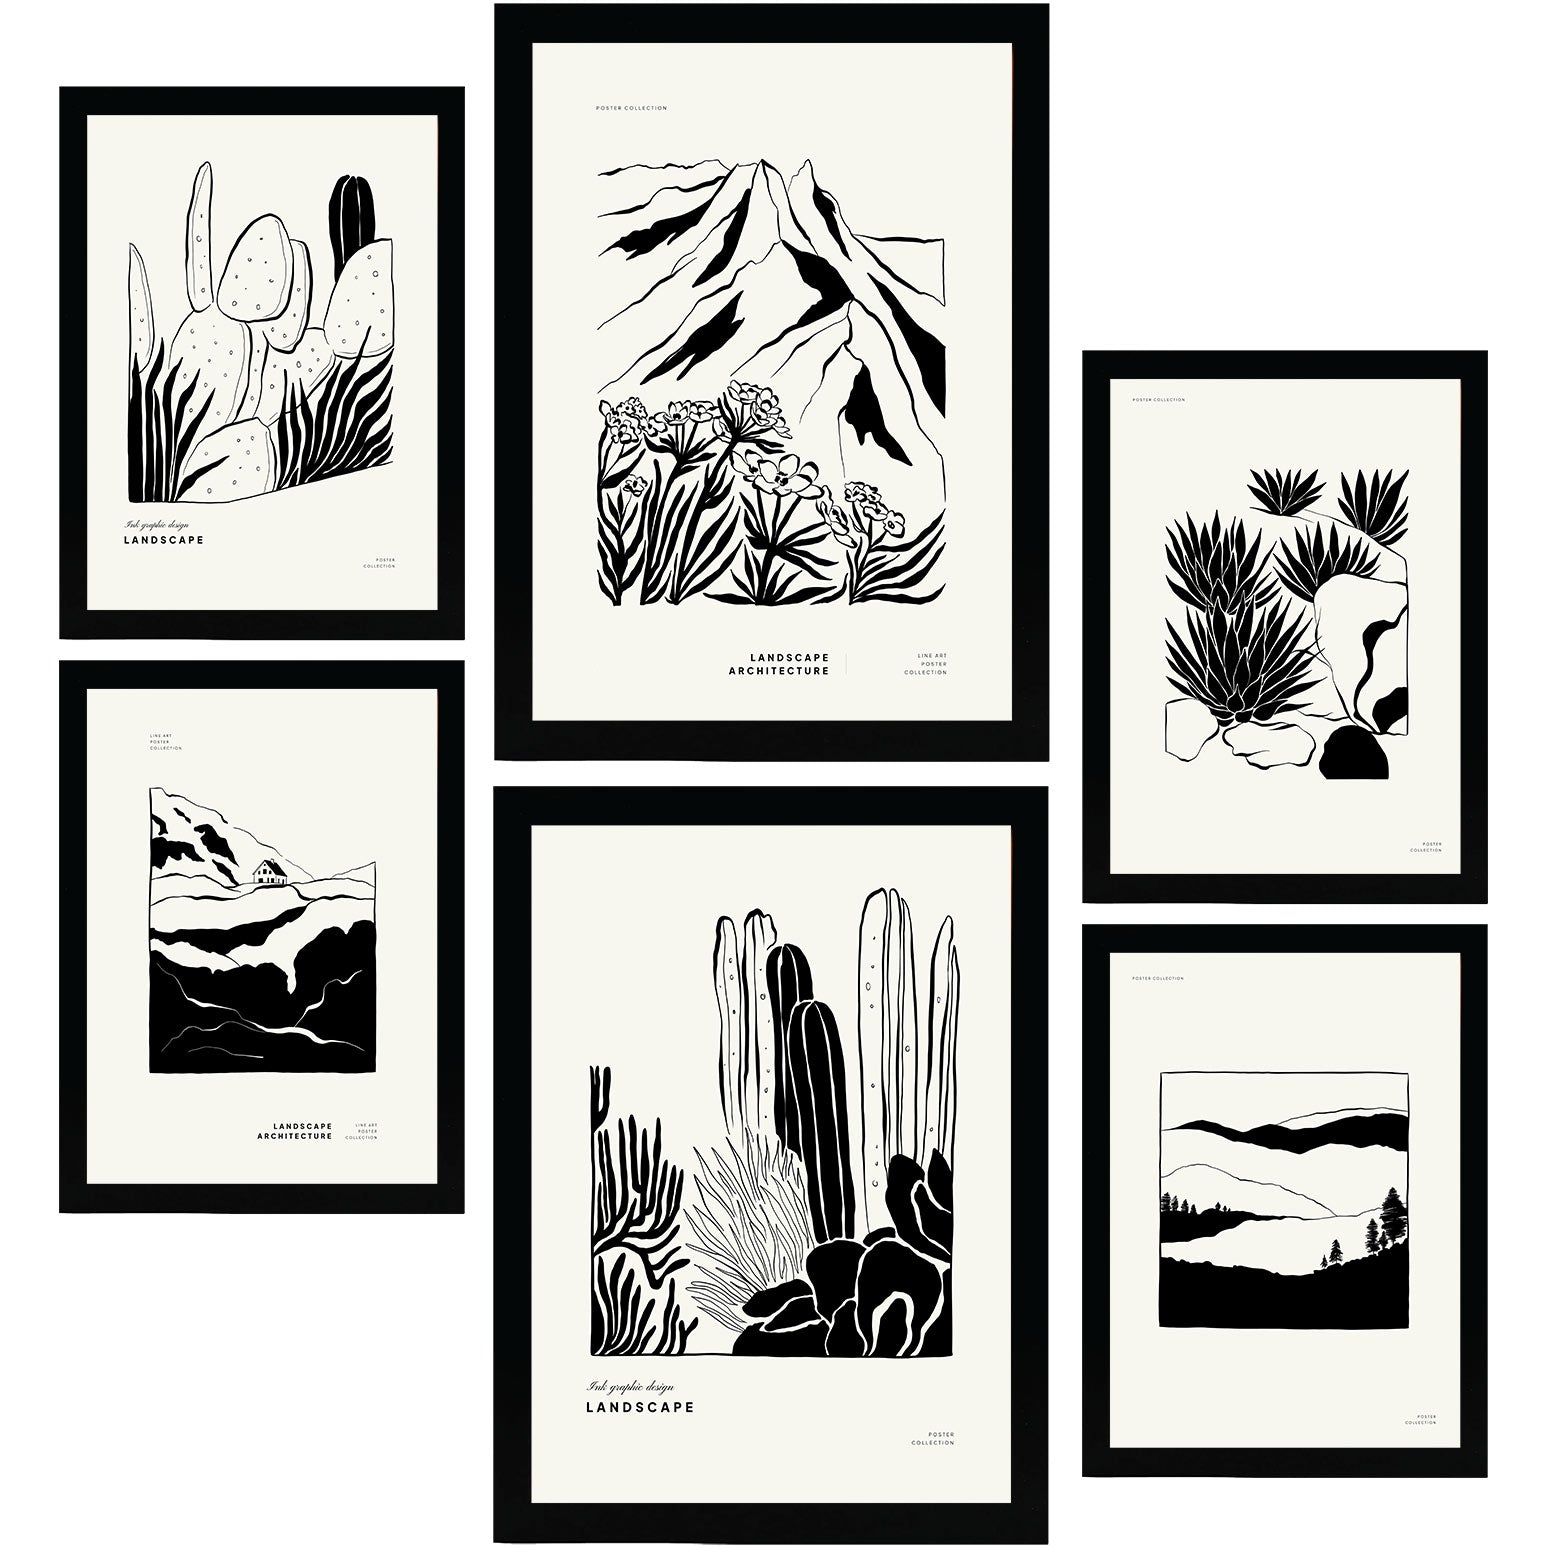 Thick Black Ink Posters. Plant Corners. Desert Inspired Landscapes-Artwork-Nacnic-Nacnic Estudio SL